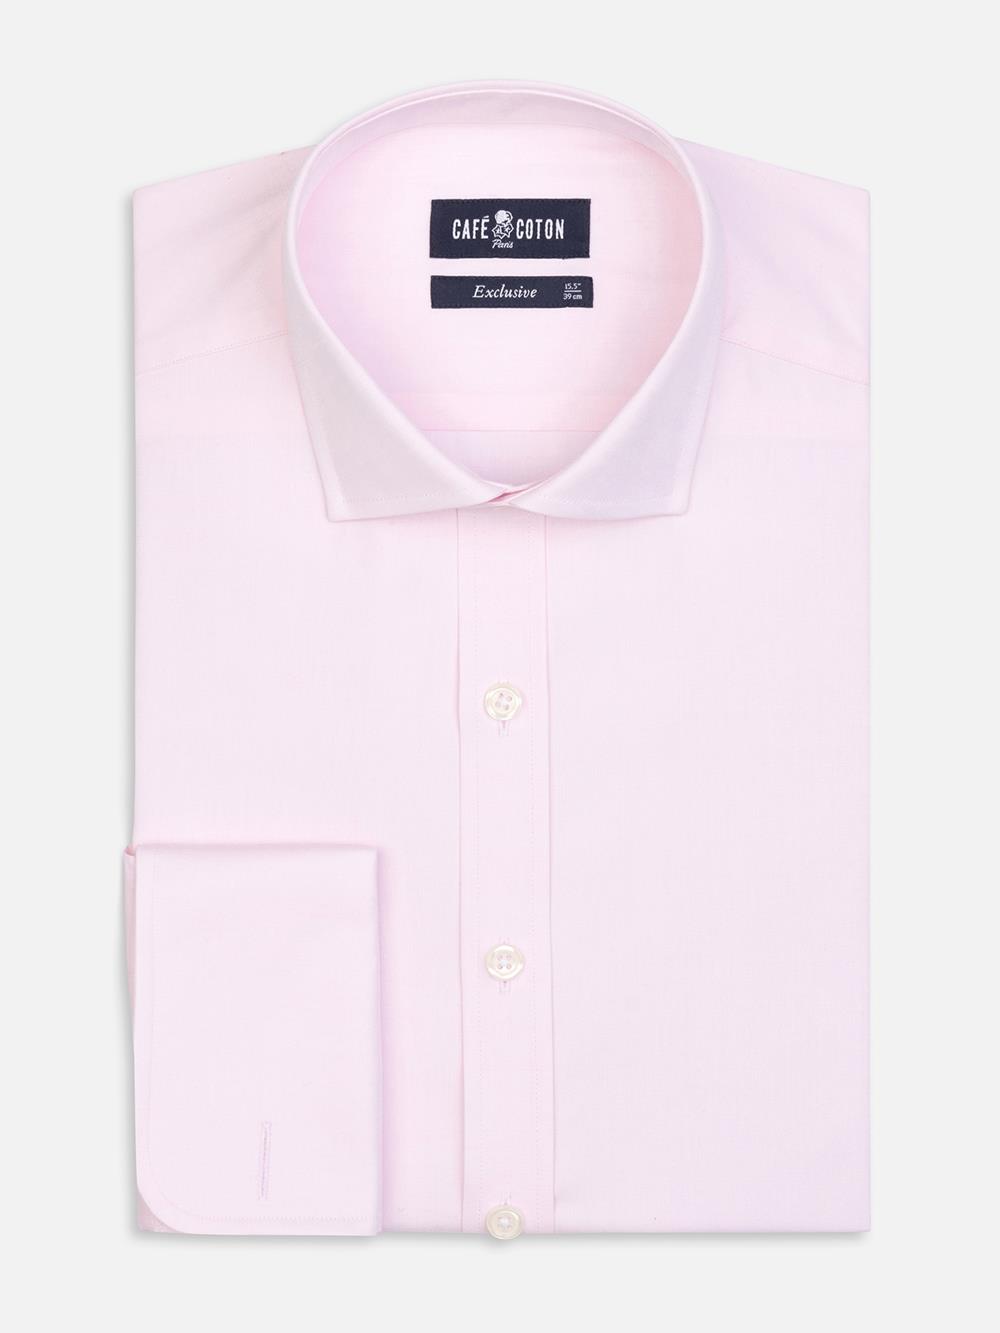 Pink pin point shirt - Double Cuffs